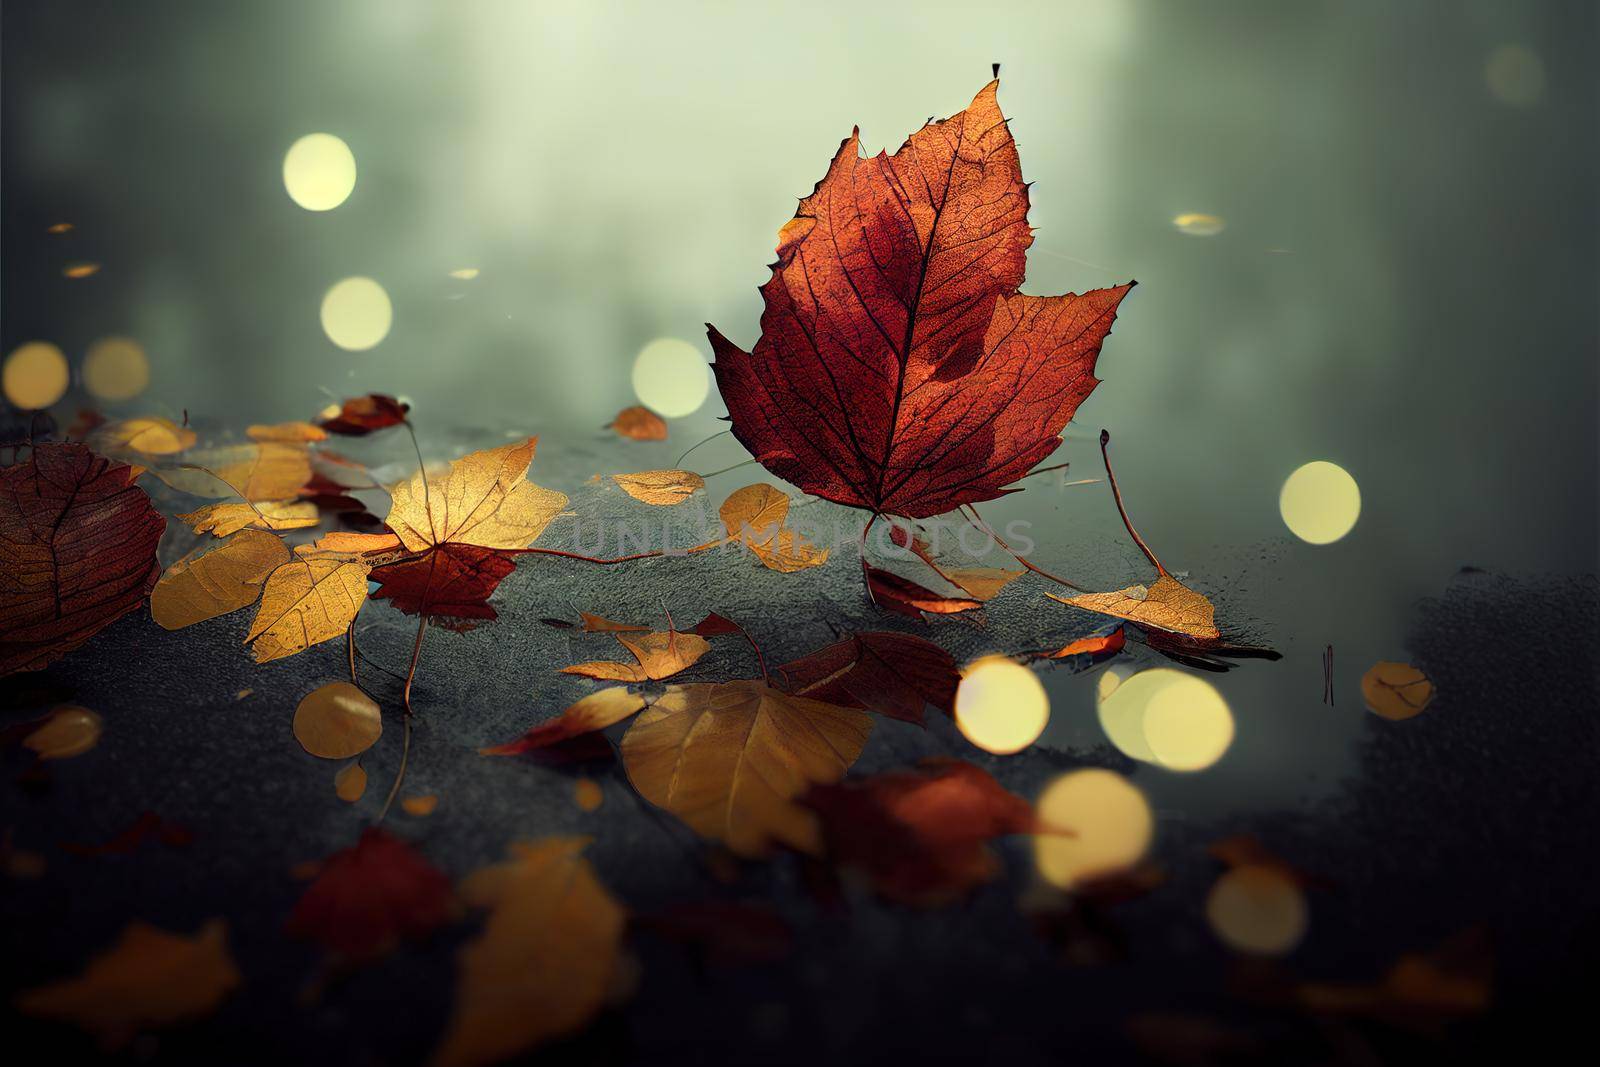 autumn leaves 12. High quality 3d illustration